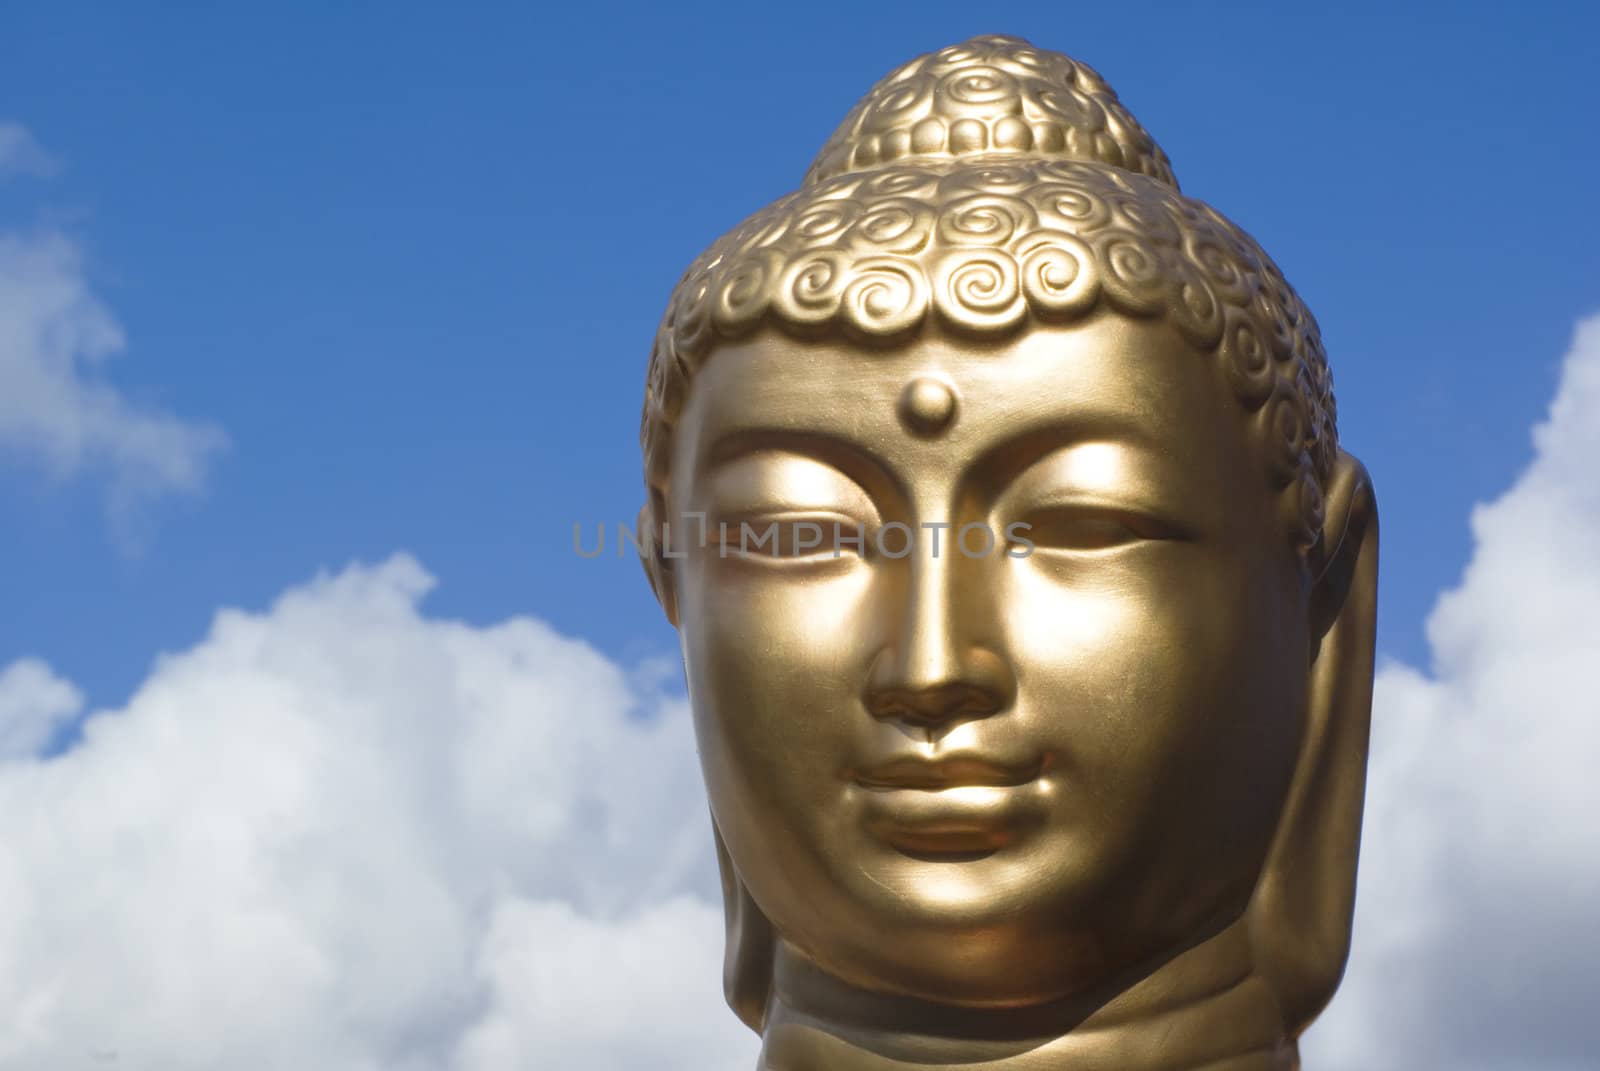 Head of a golden buddha against a blue cloudy sky.